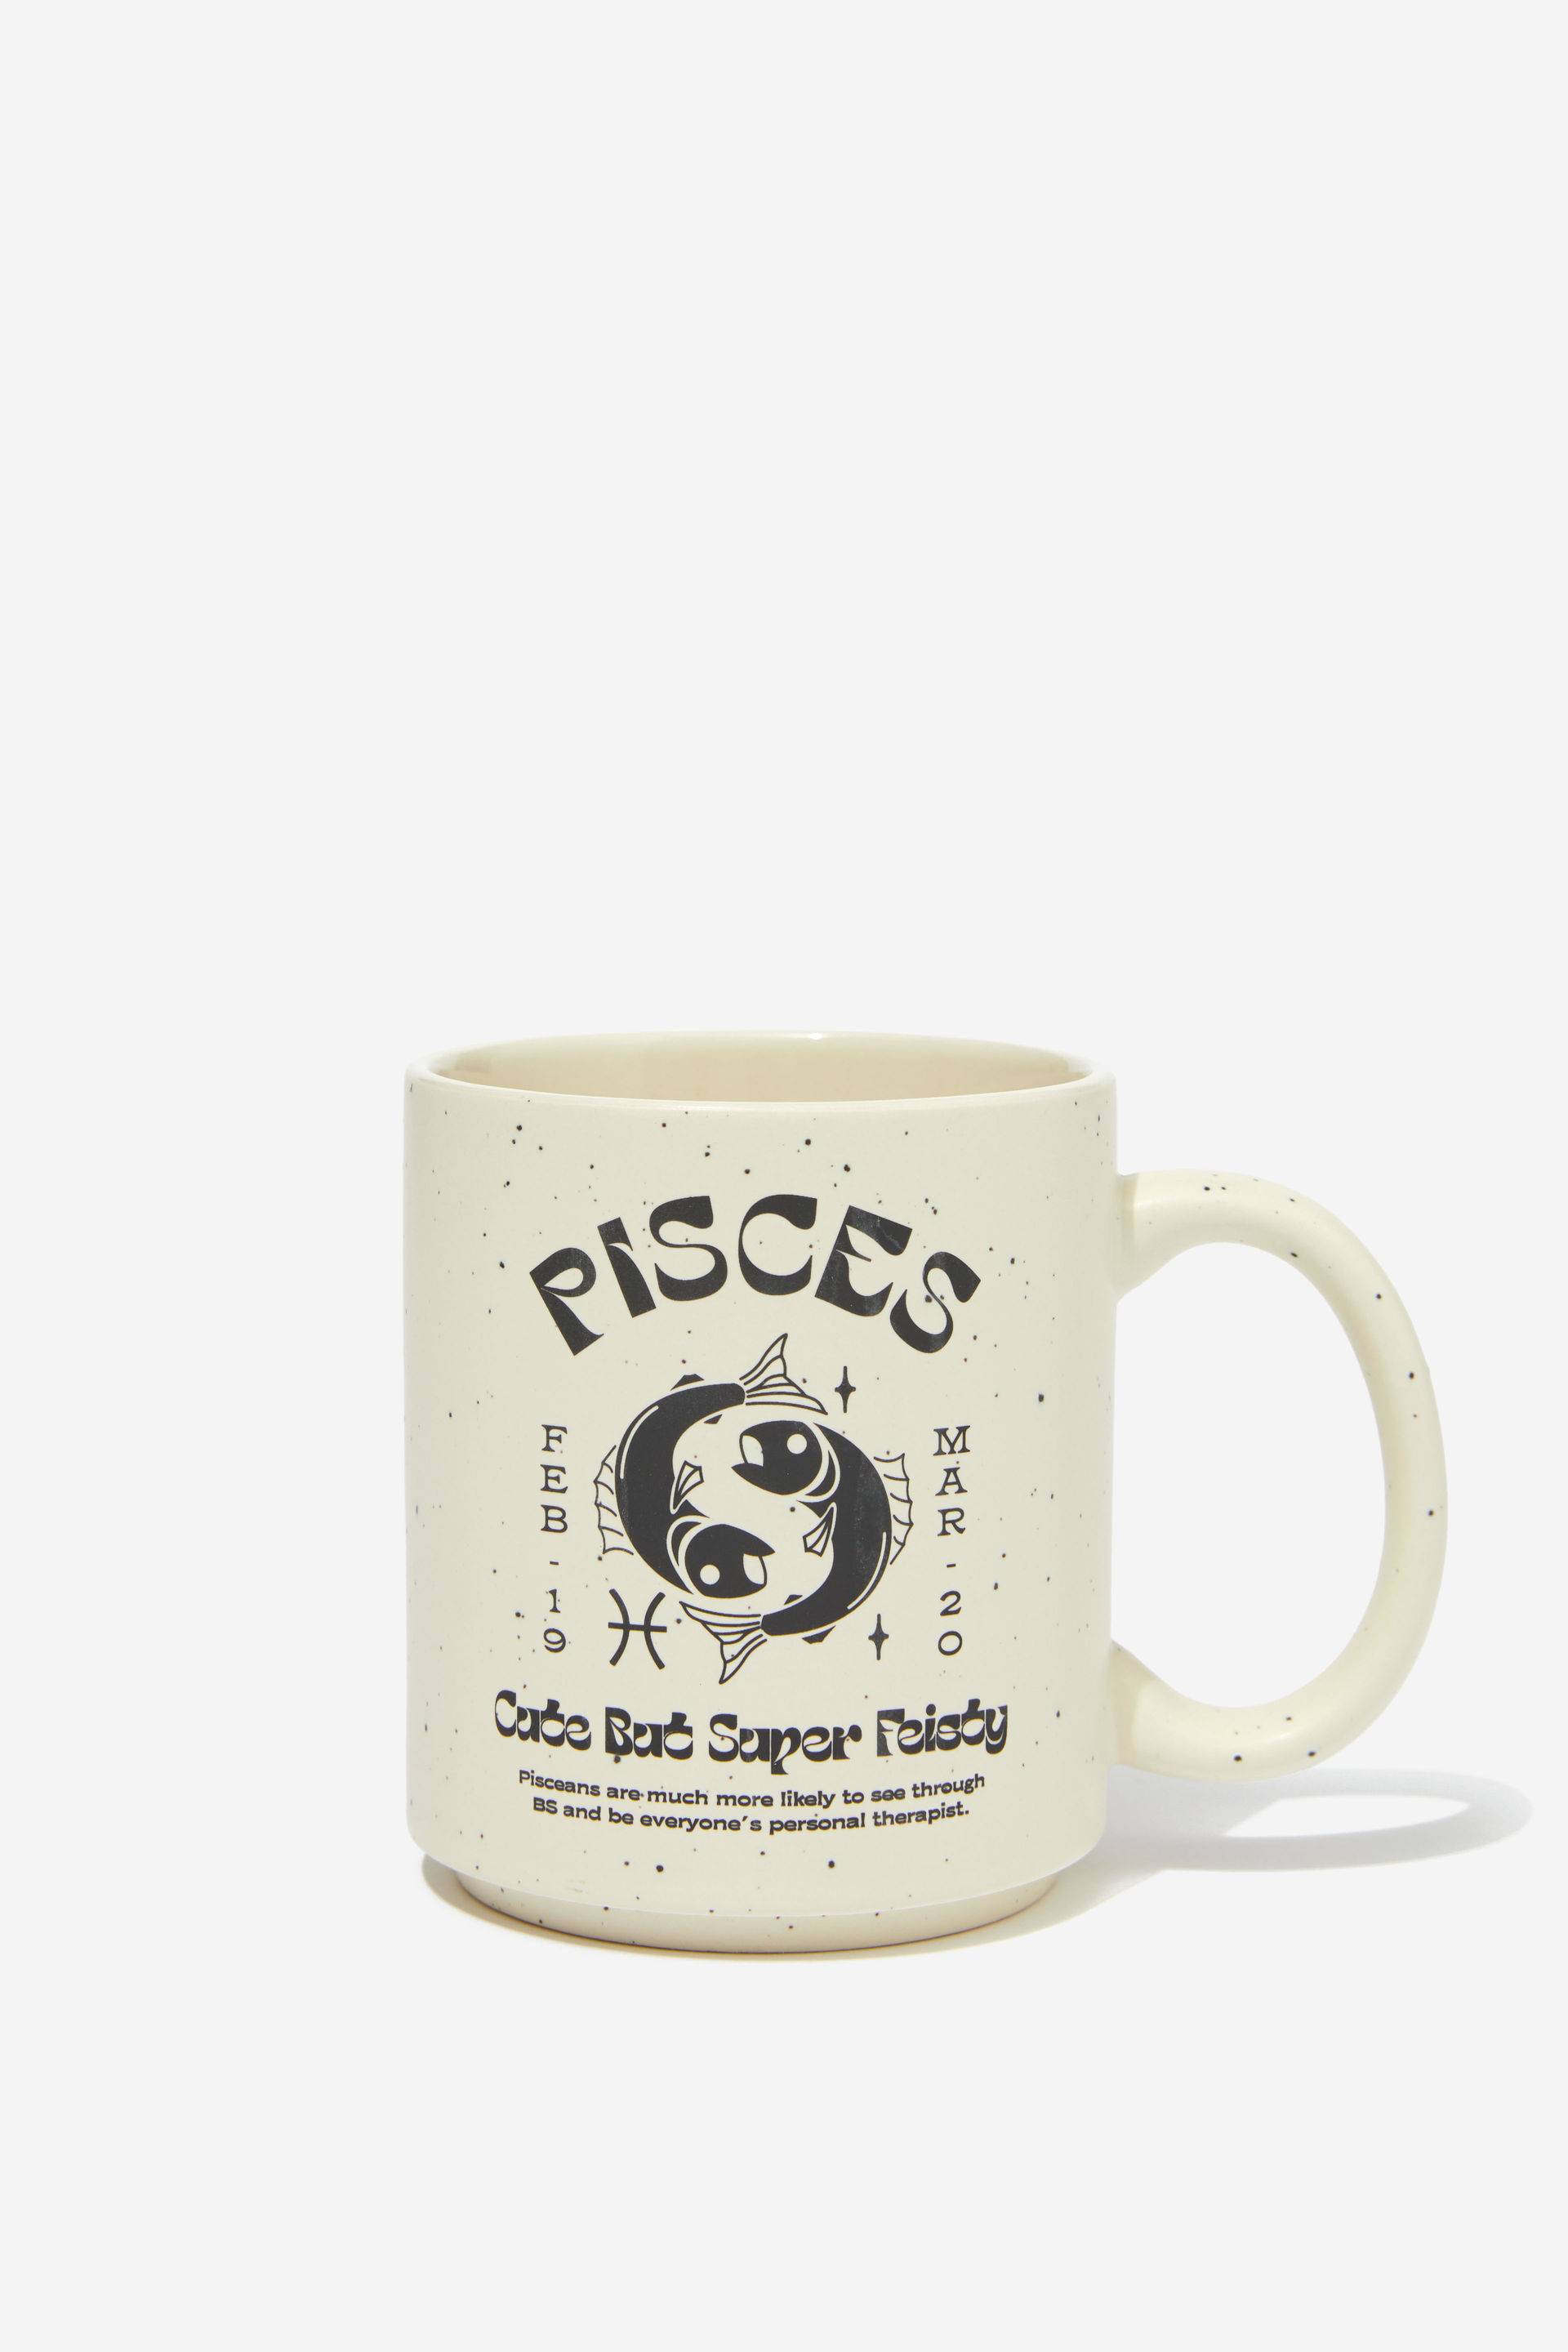 Typo - Horoscope Mug - Pisces